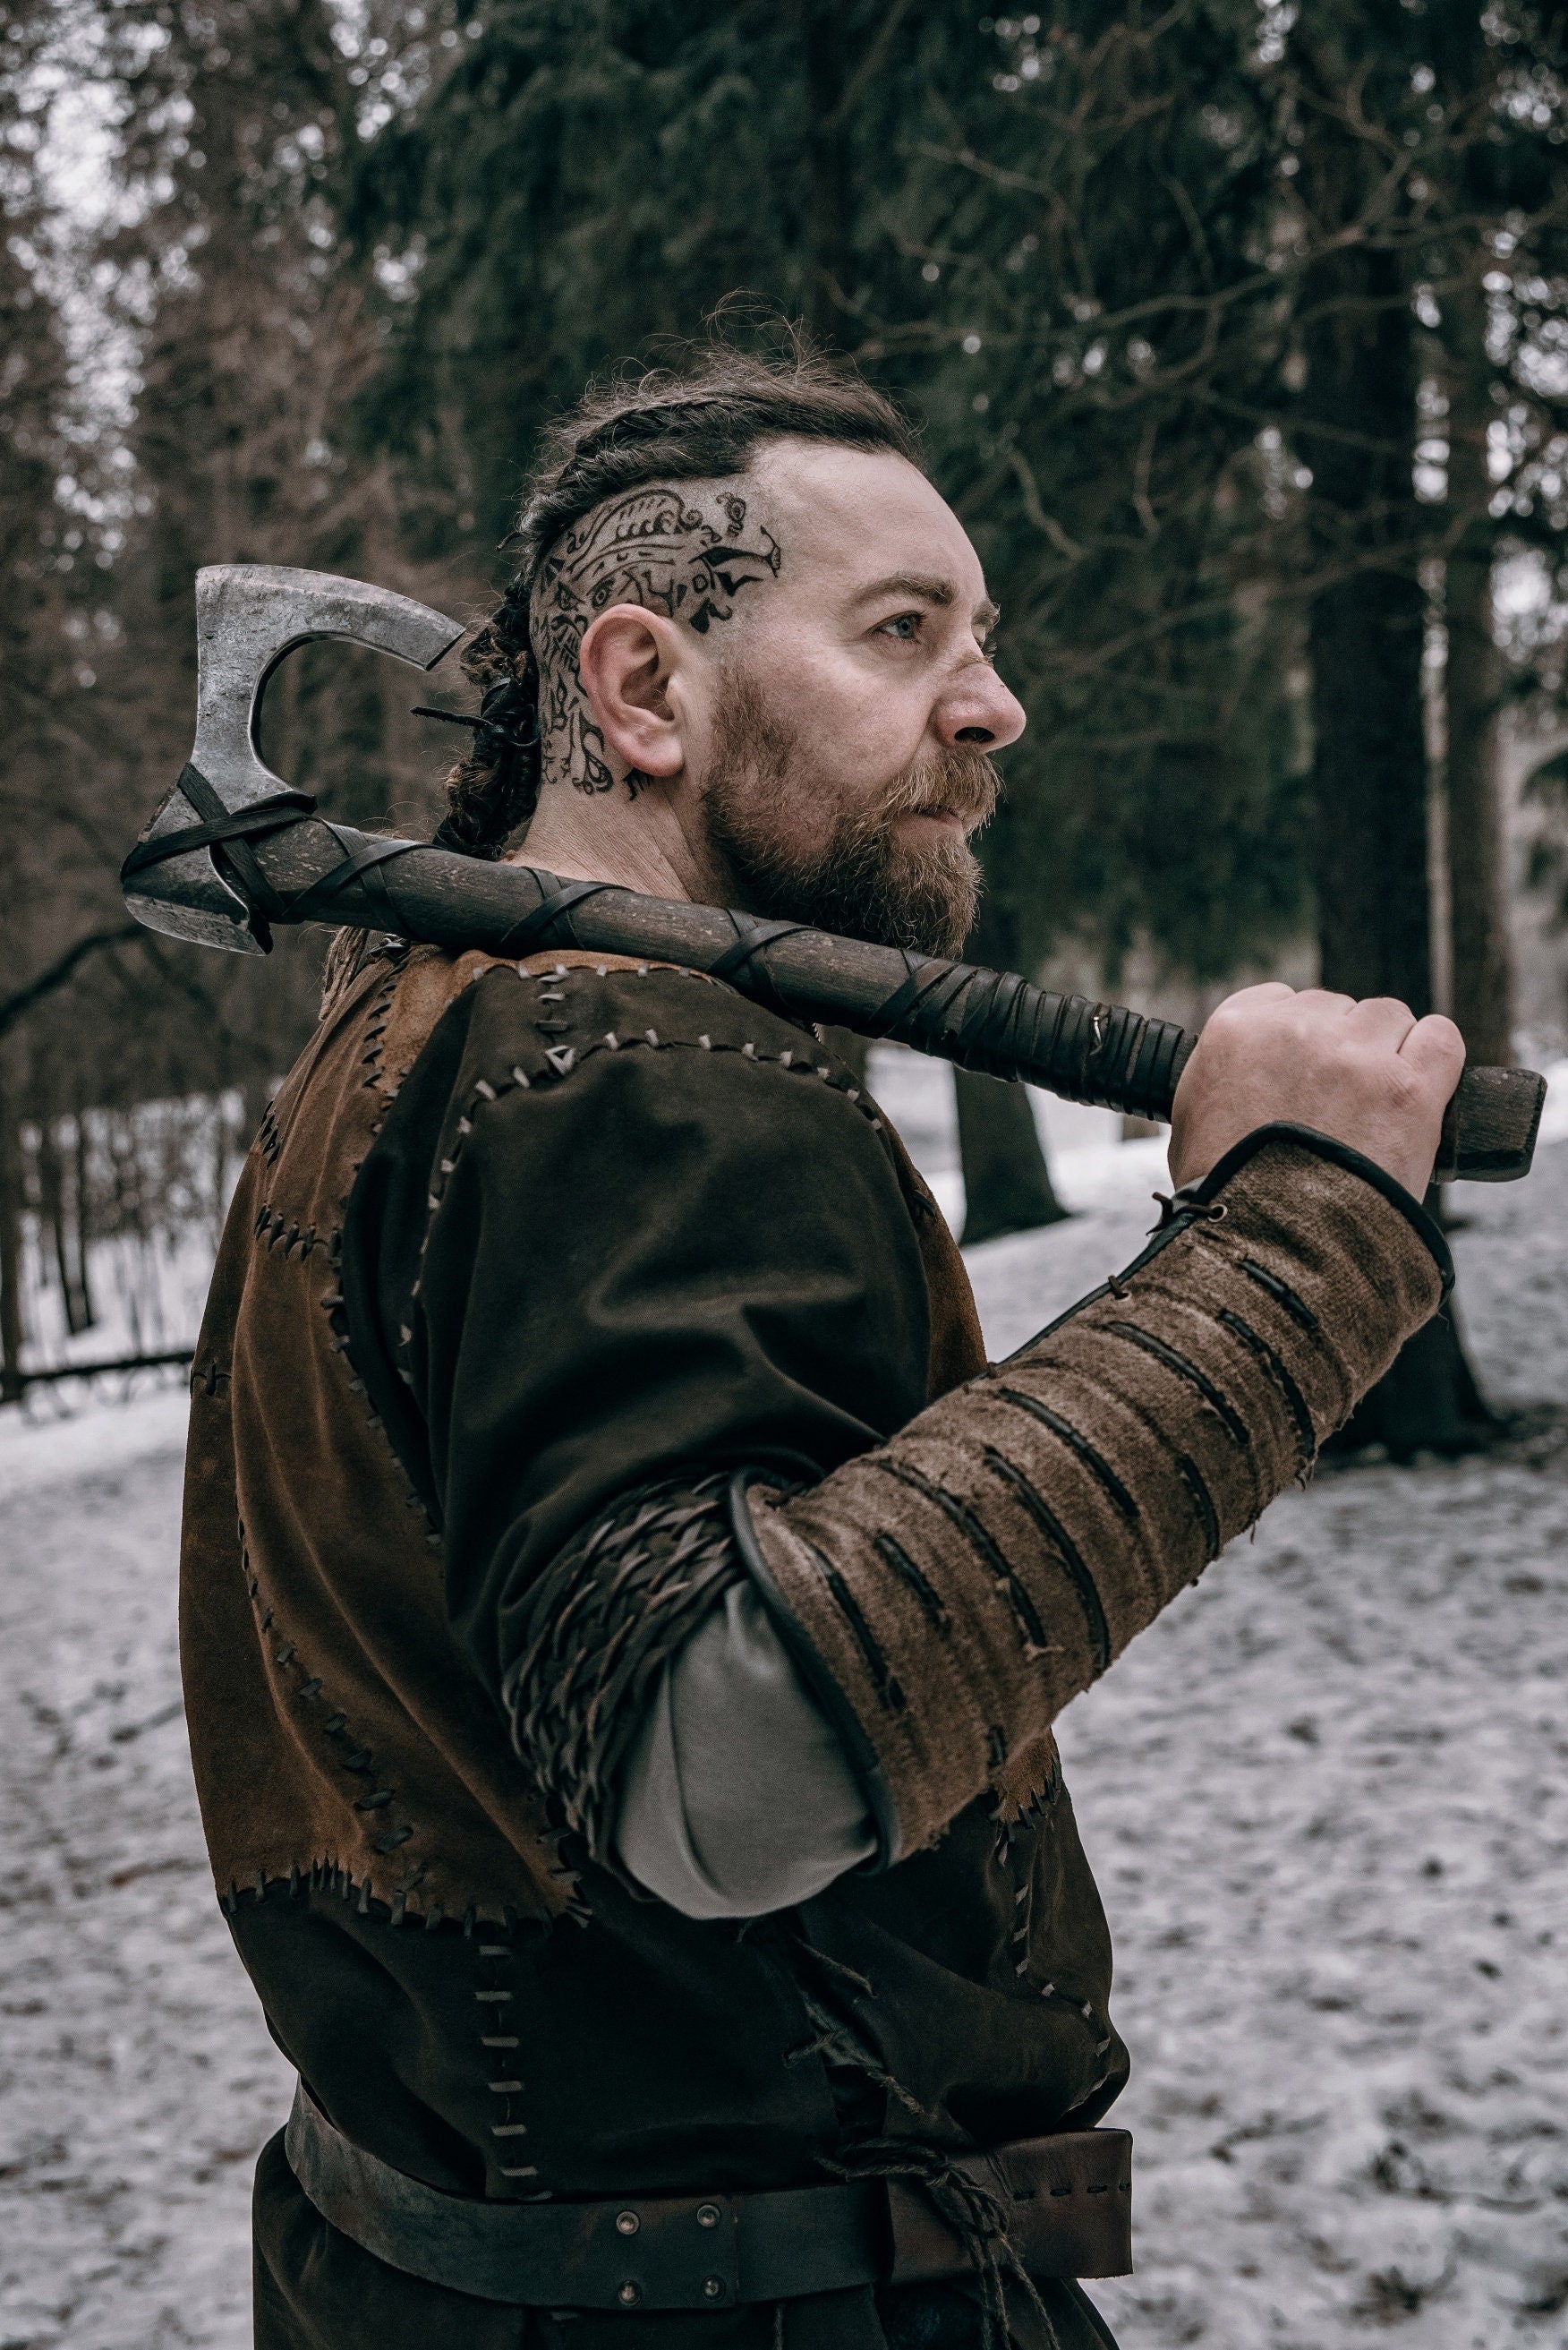 ⭐ Viking Genuine Leather Bracers - Medieval Shop at House of Warfare